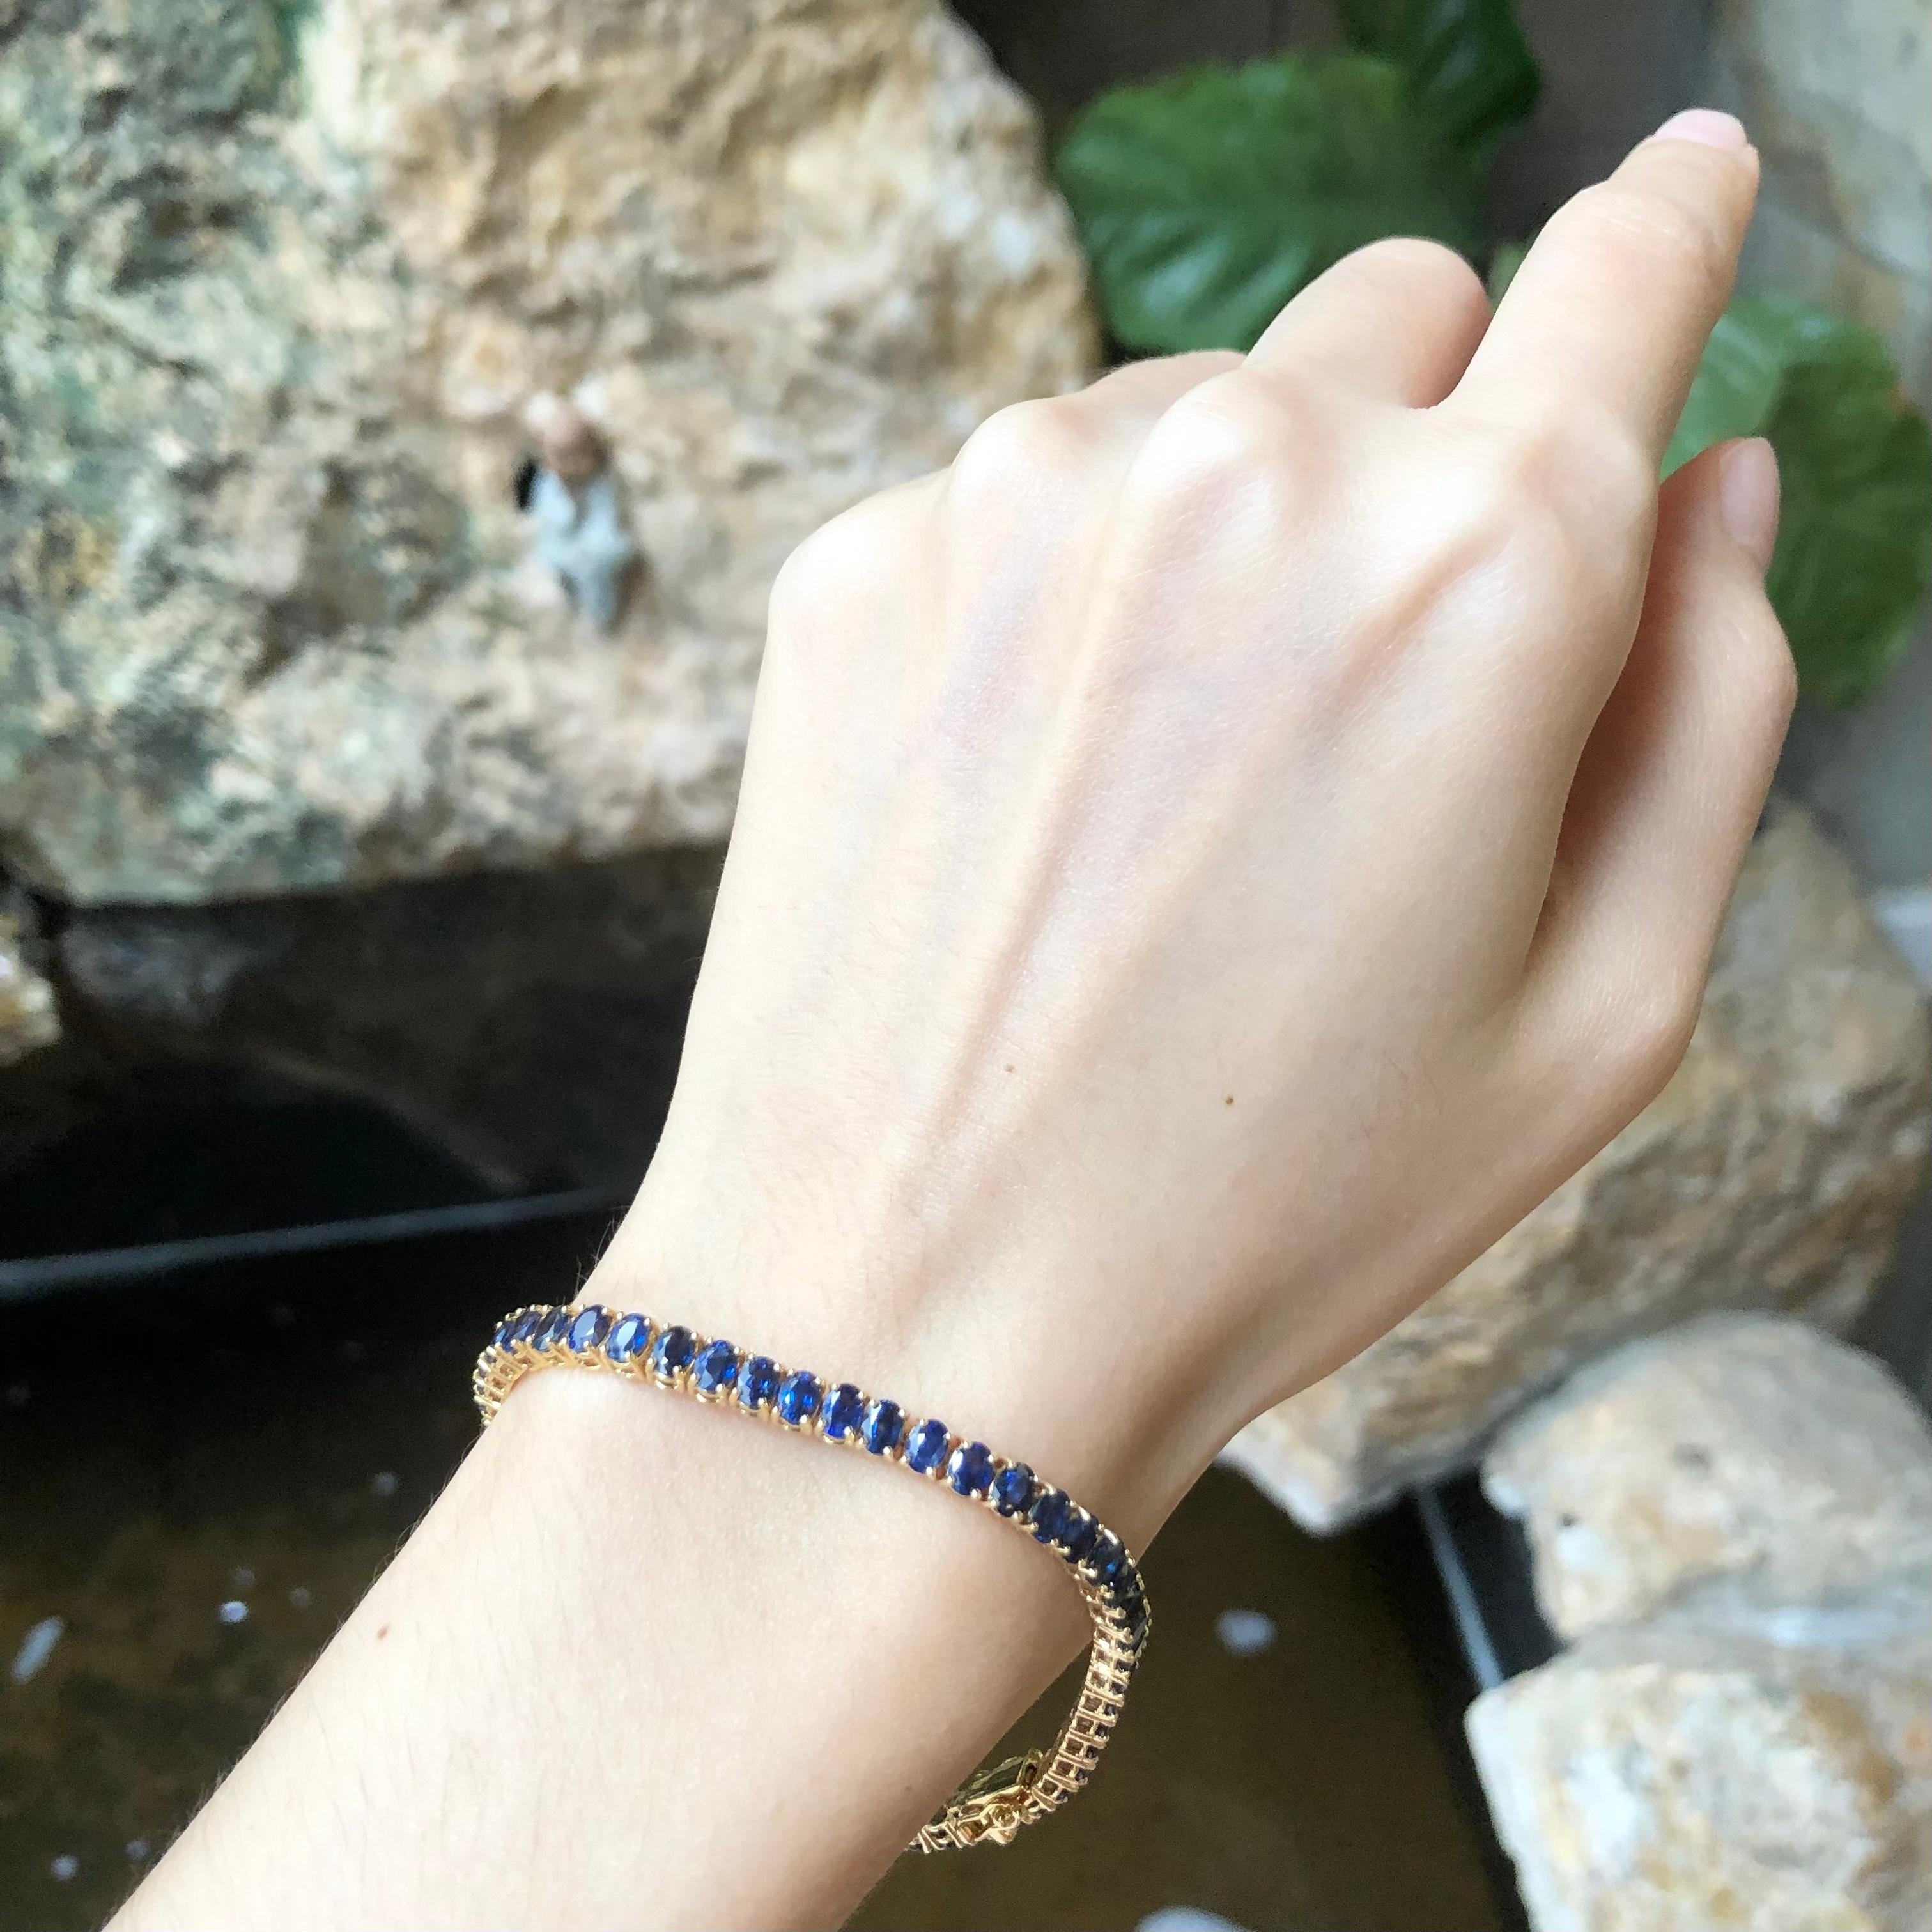 Blue Sapphire 12.73 carats Bracelet set in 14 Karat Gold Settings

Width:  0.4 cm 
Length: 18.0 cm
Total Weight: 12.56 grams

